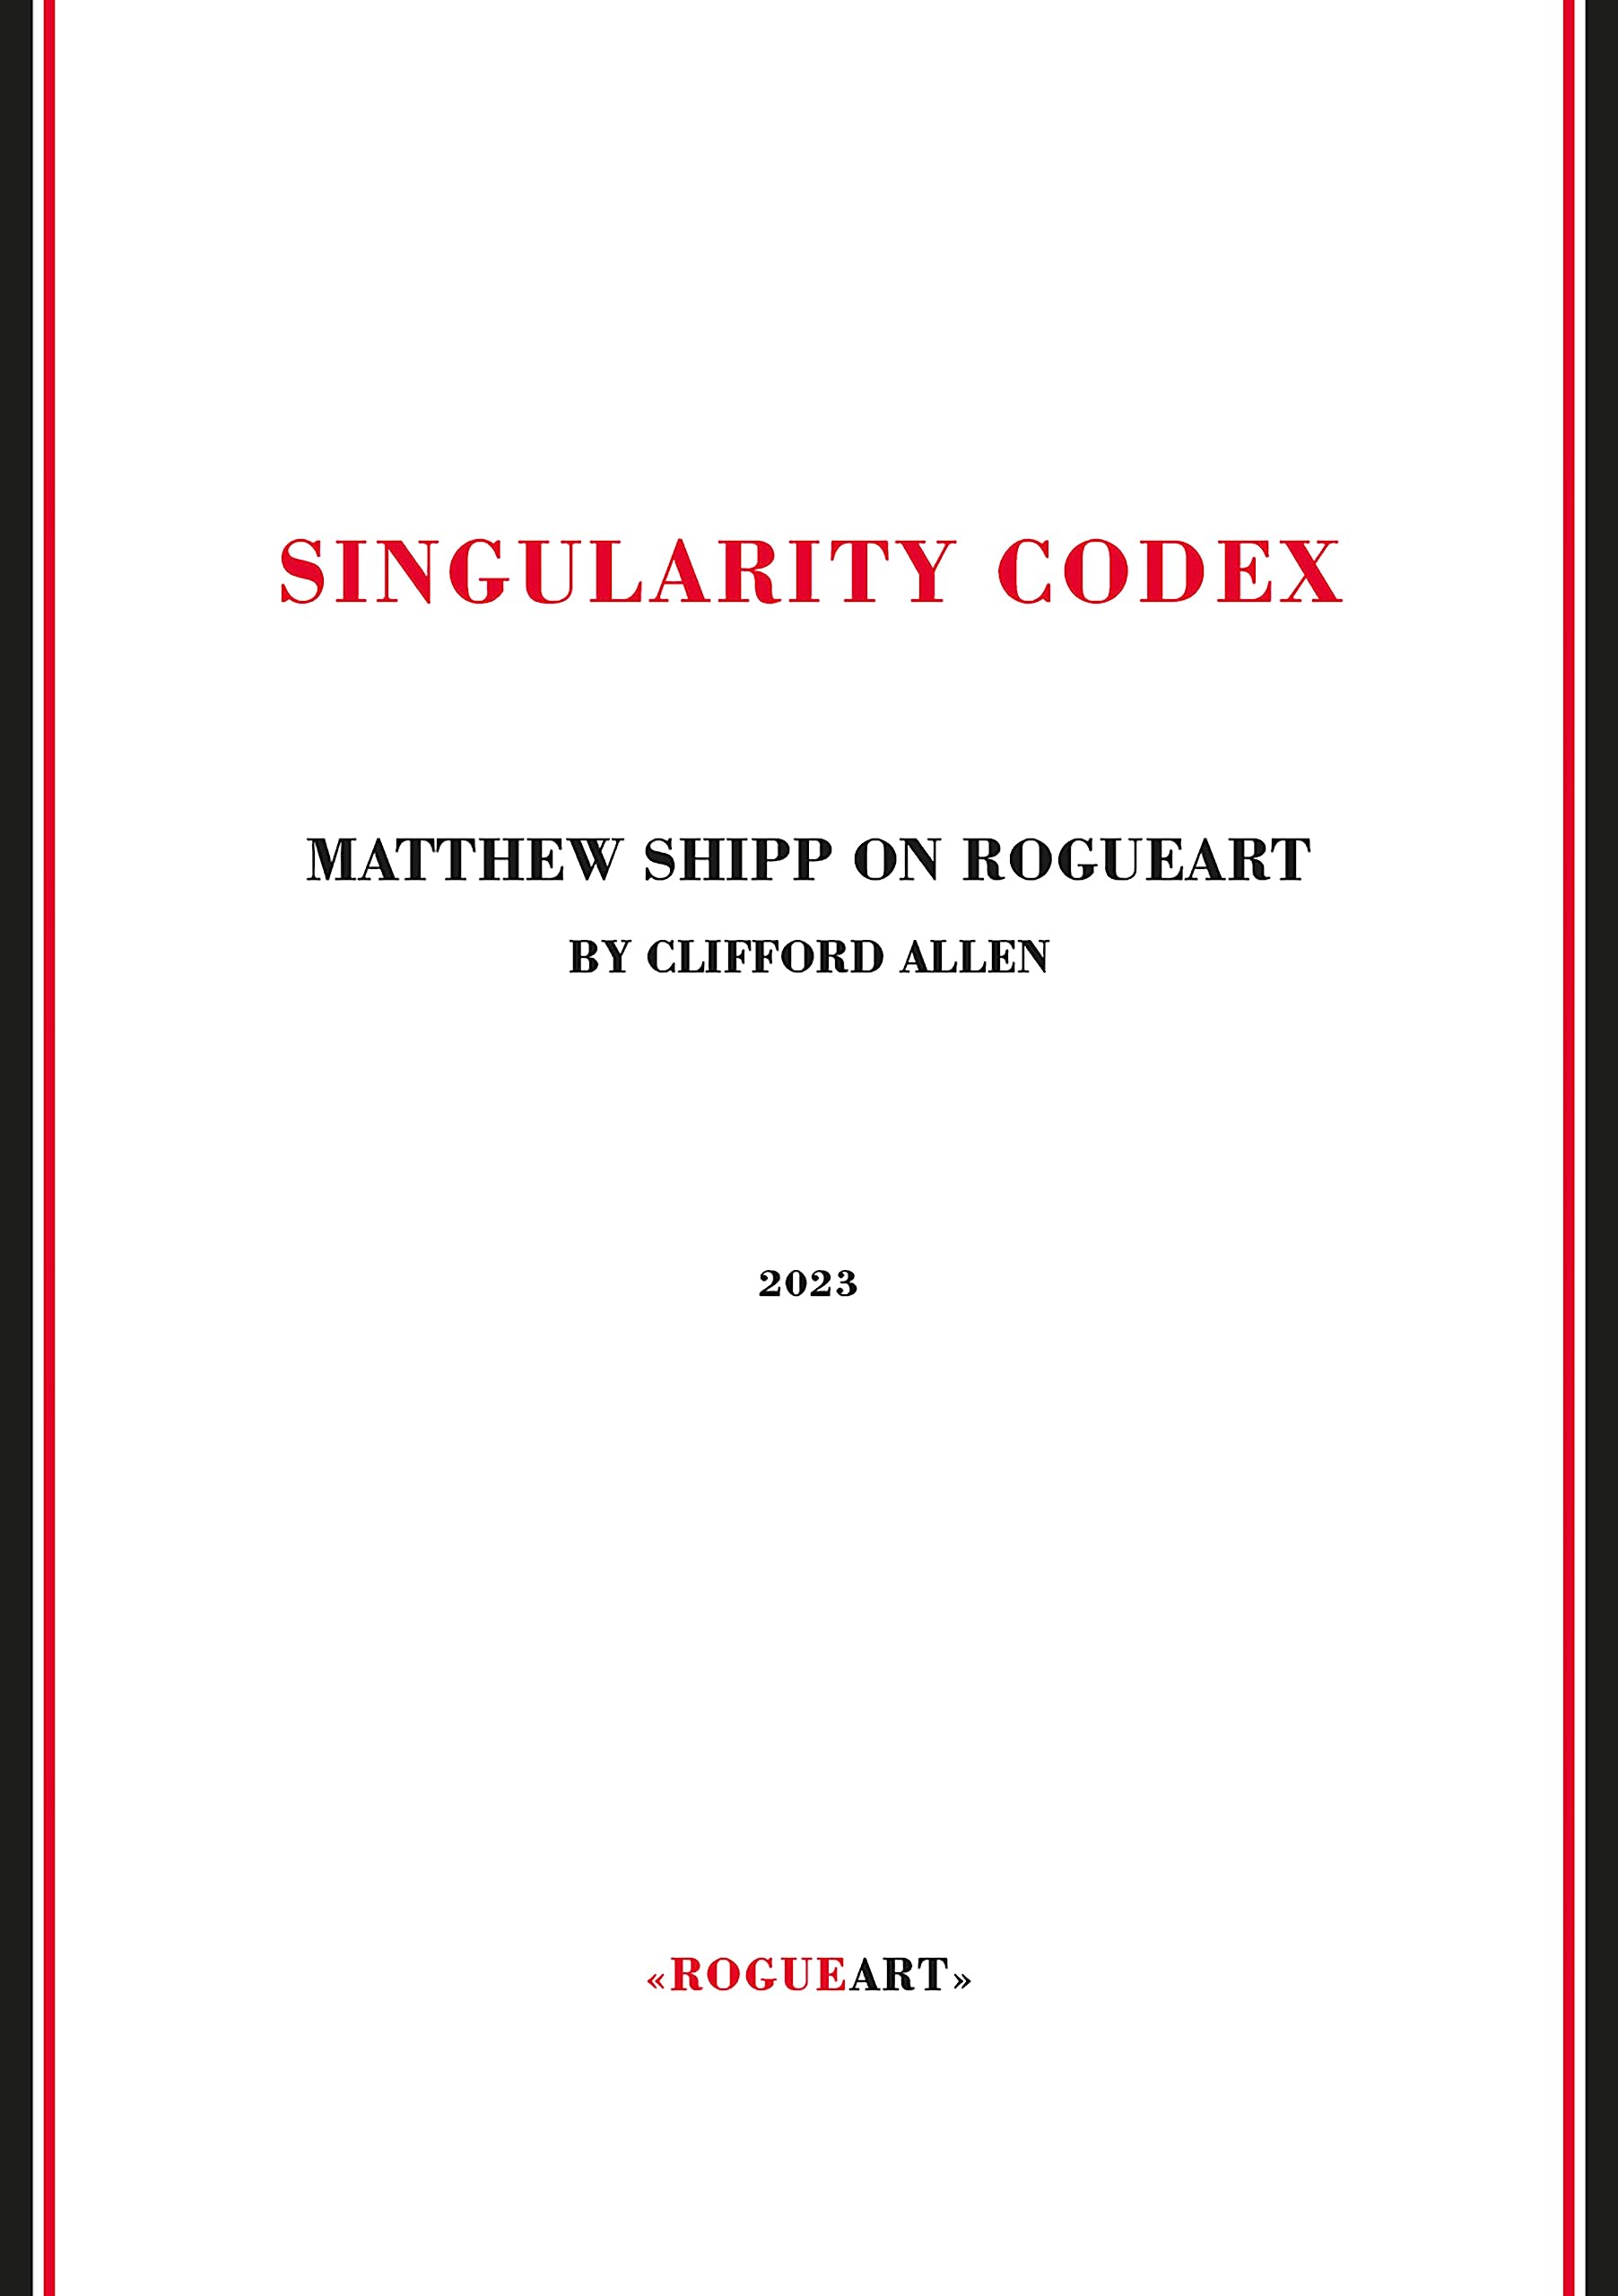 Review: Singularity Codex (Matthew Shipp) by Clifford Allen